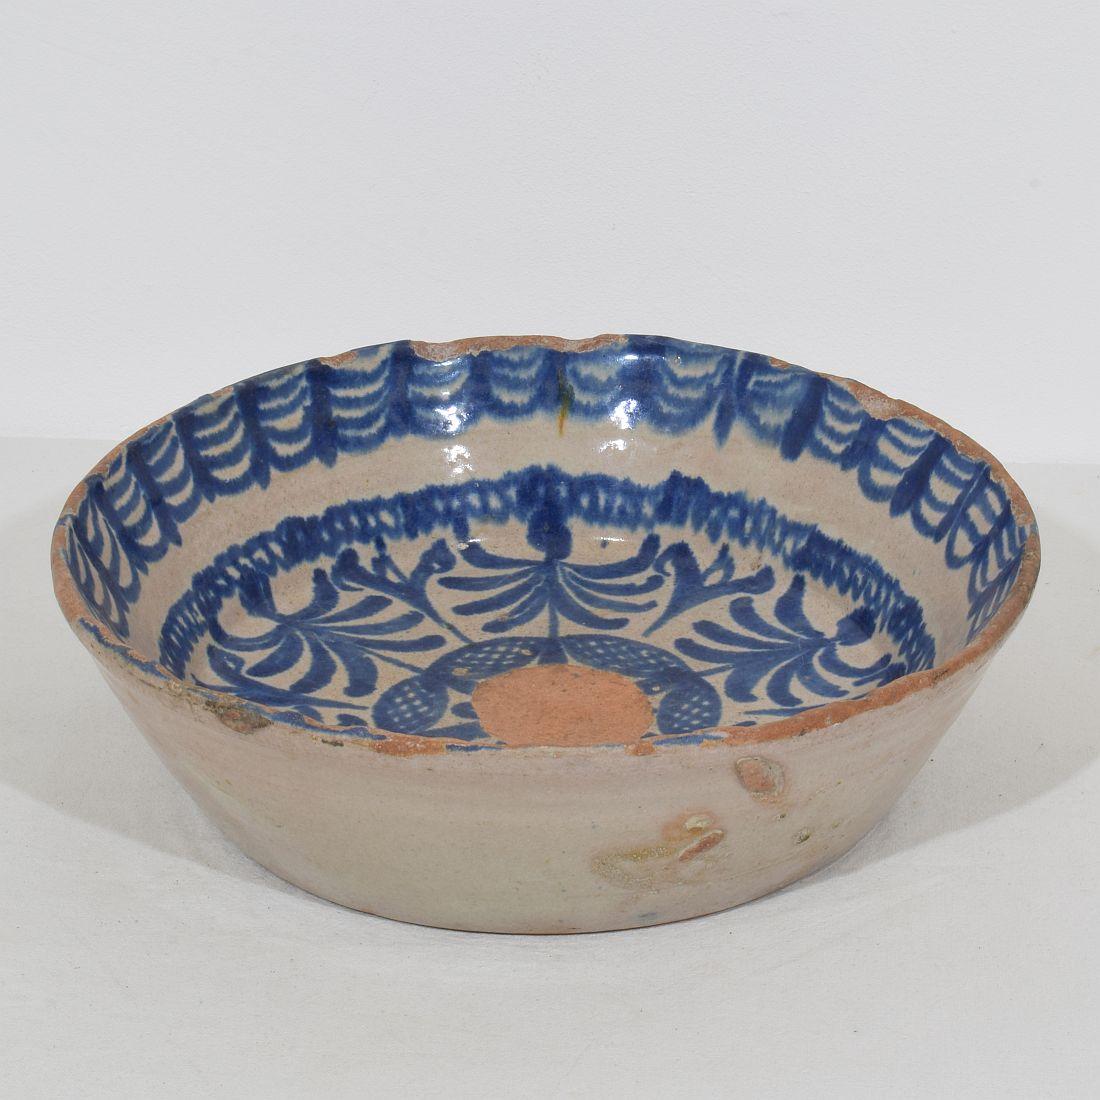 18th Century and Earlier 18th Century Spanish Glazed Terracotta Bowl